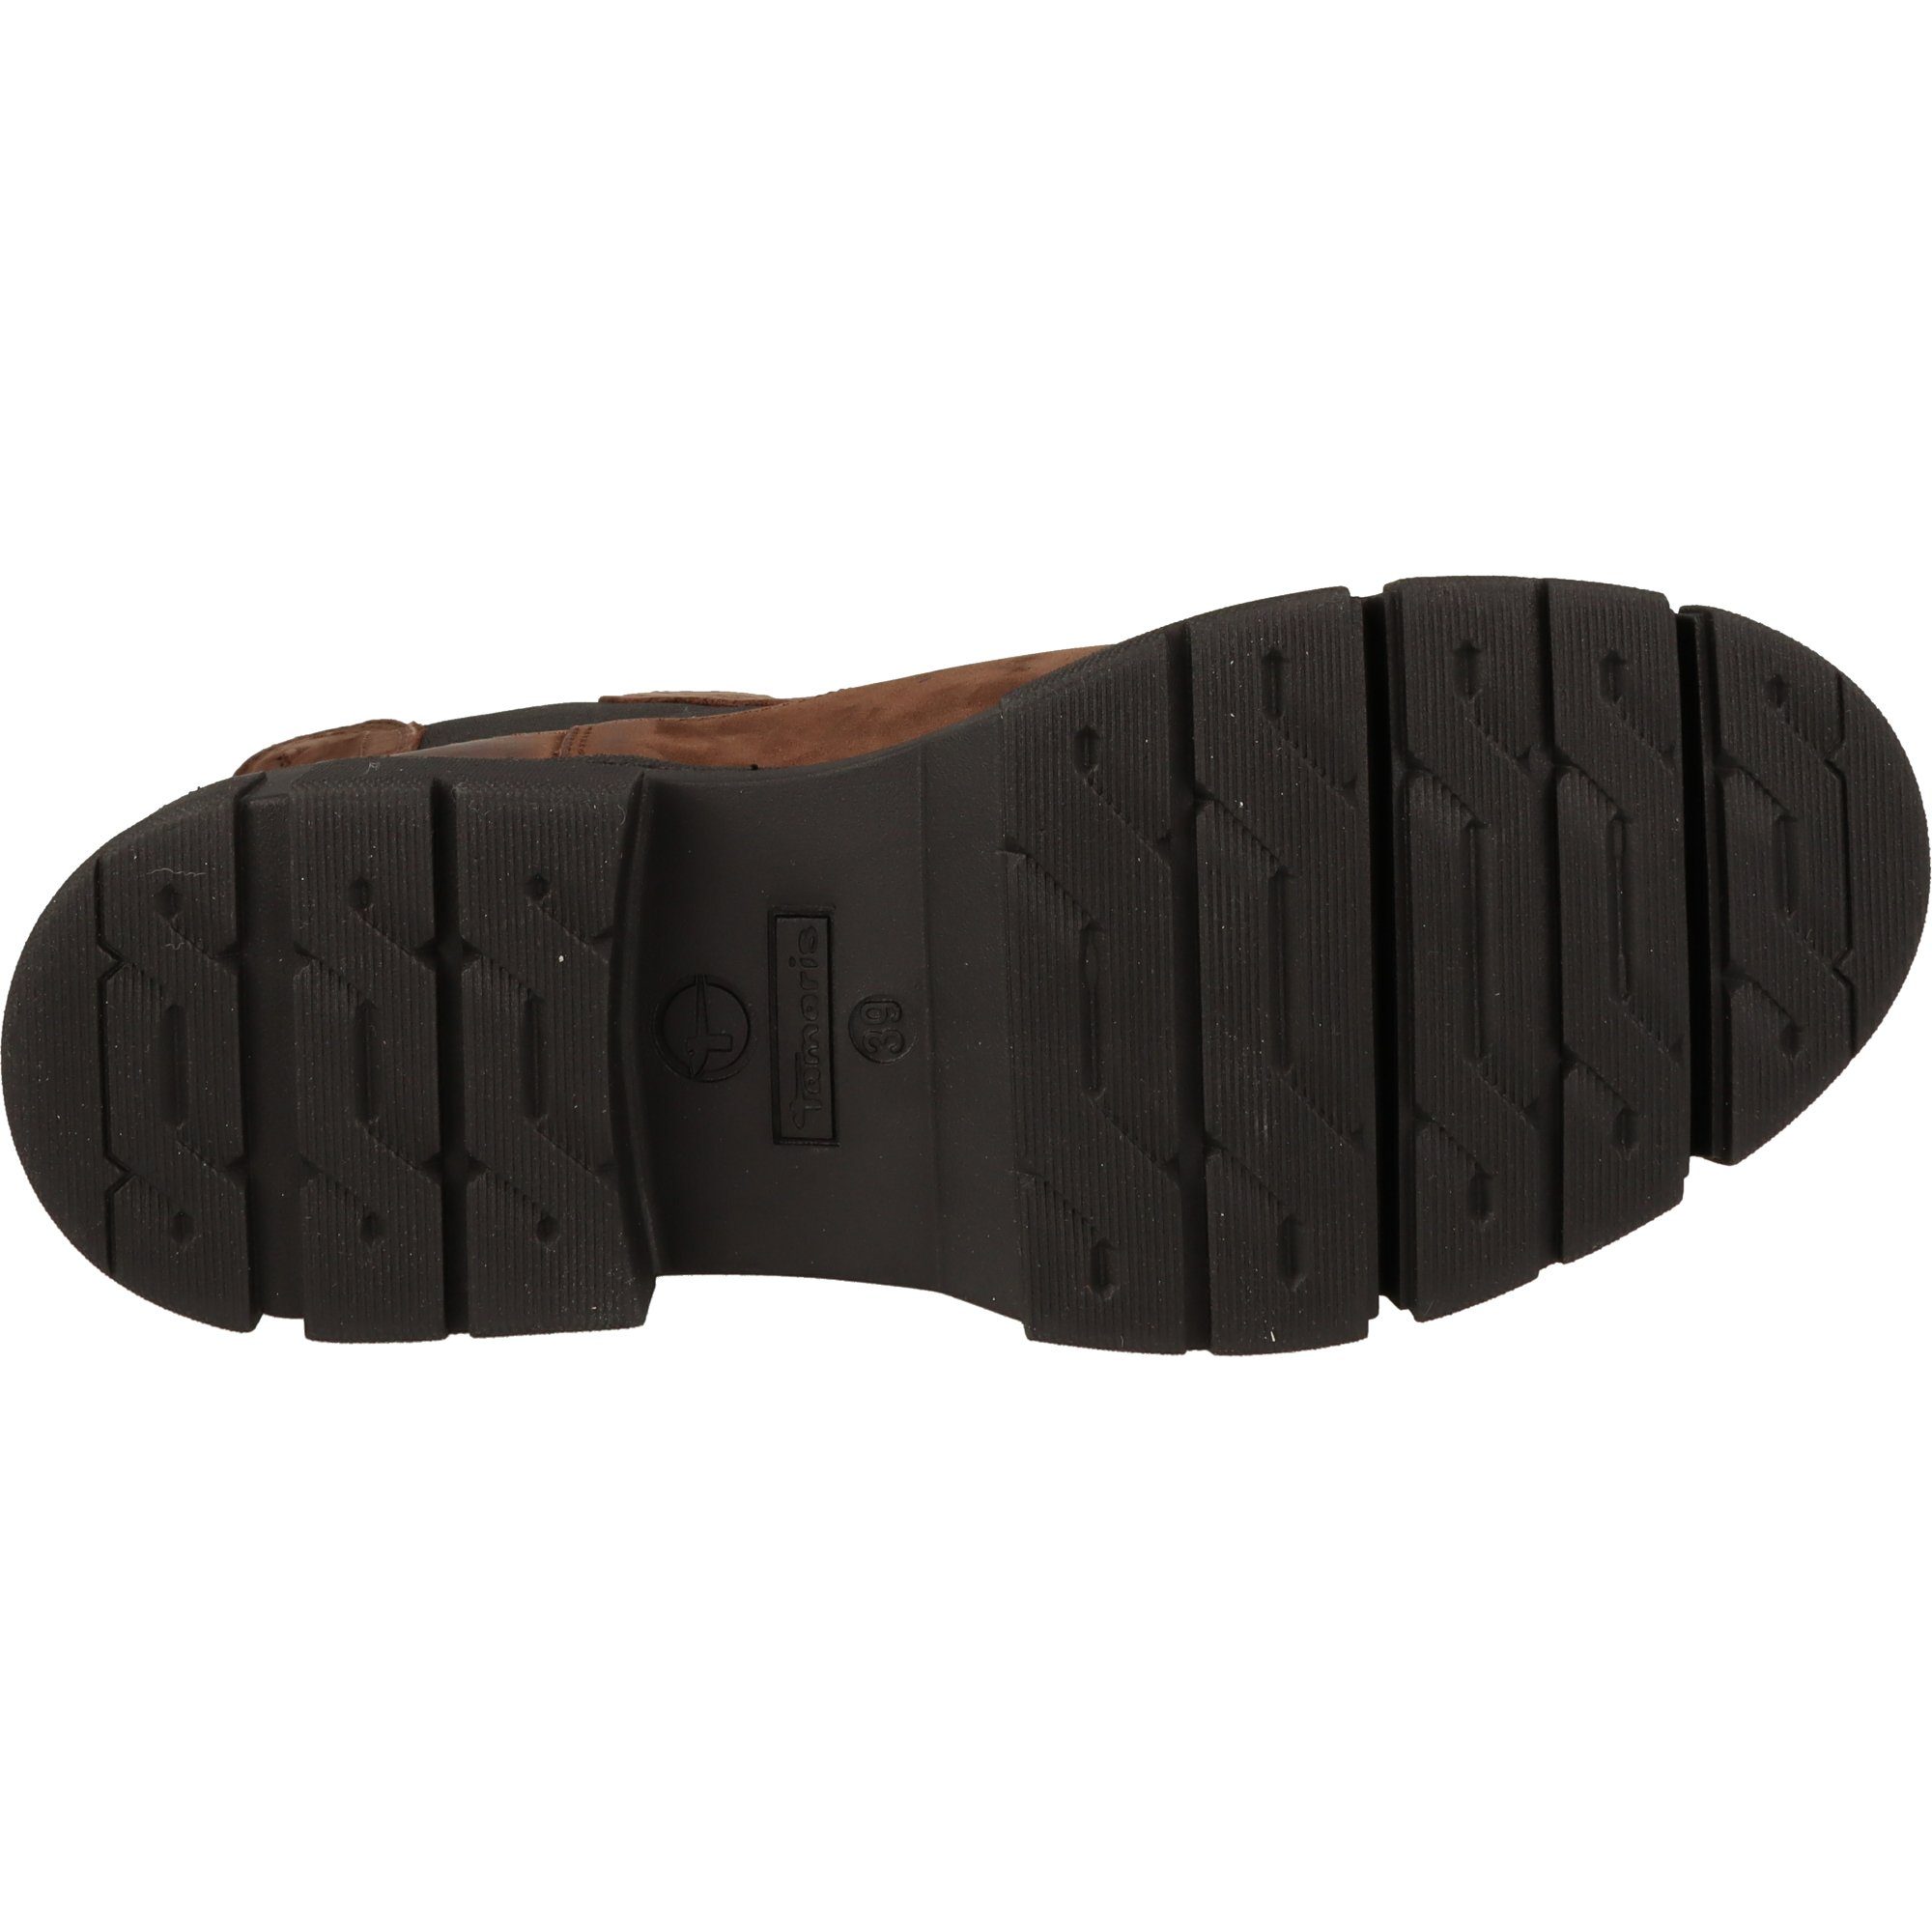 Tamaris Damen Leder Stiefel 1-25901-41 Chelseaboots Schuhe Mocca Nubuc Mode gepolstert